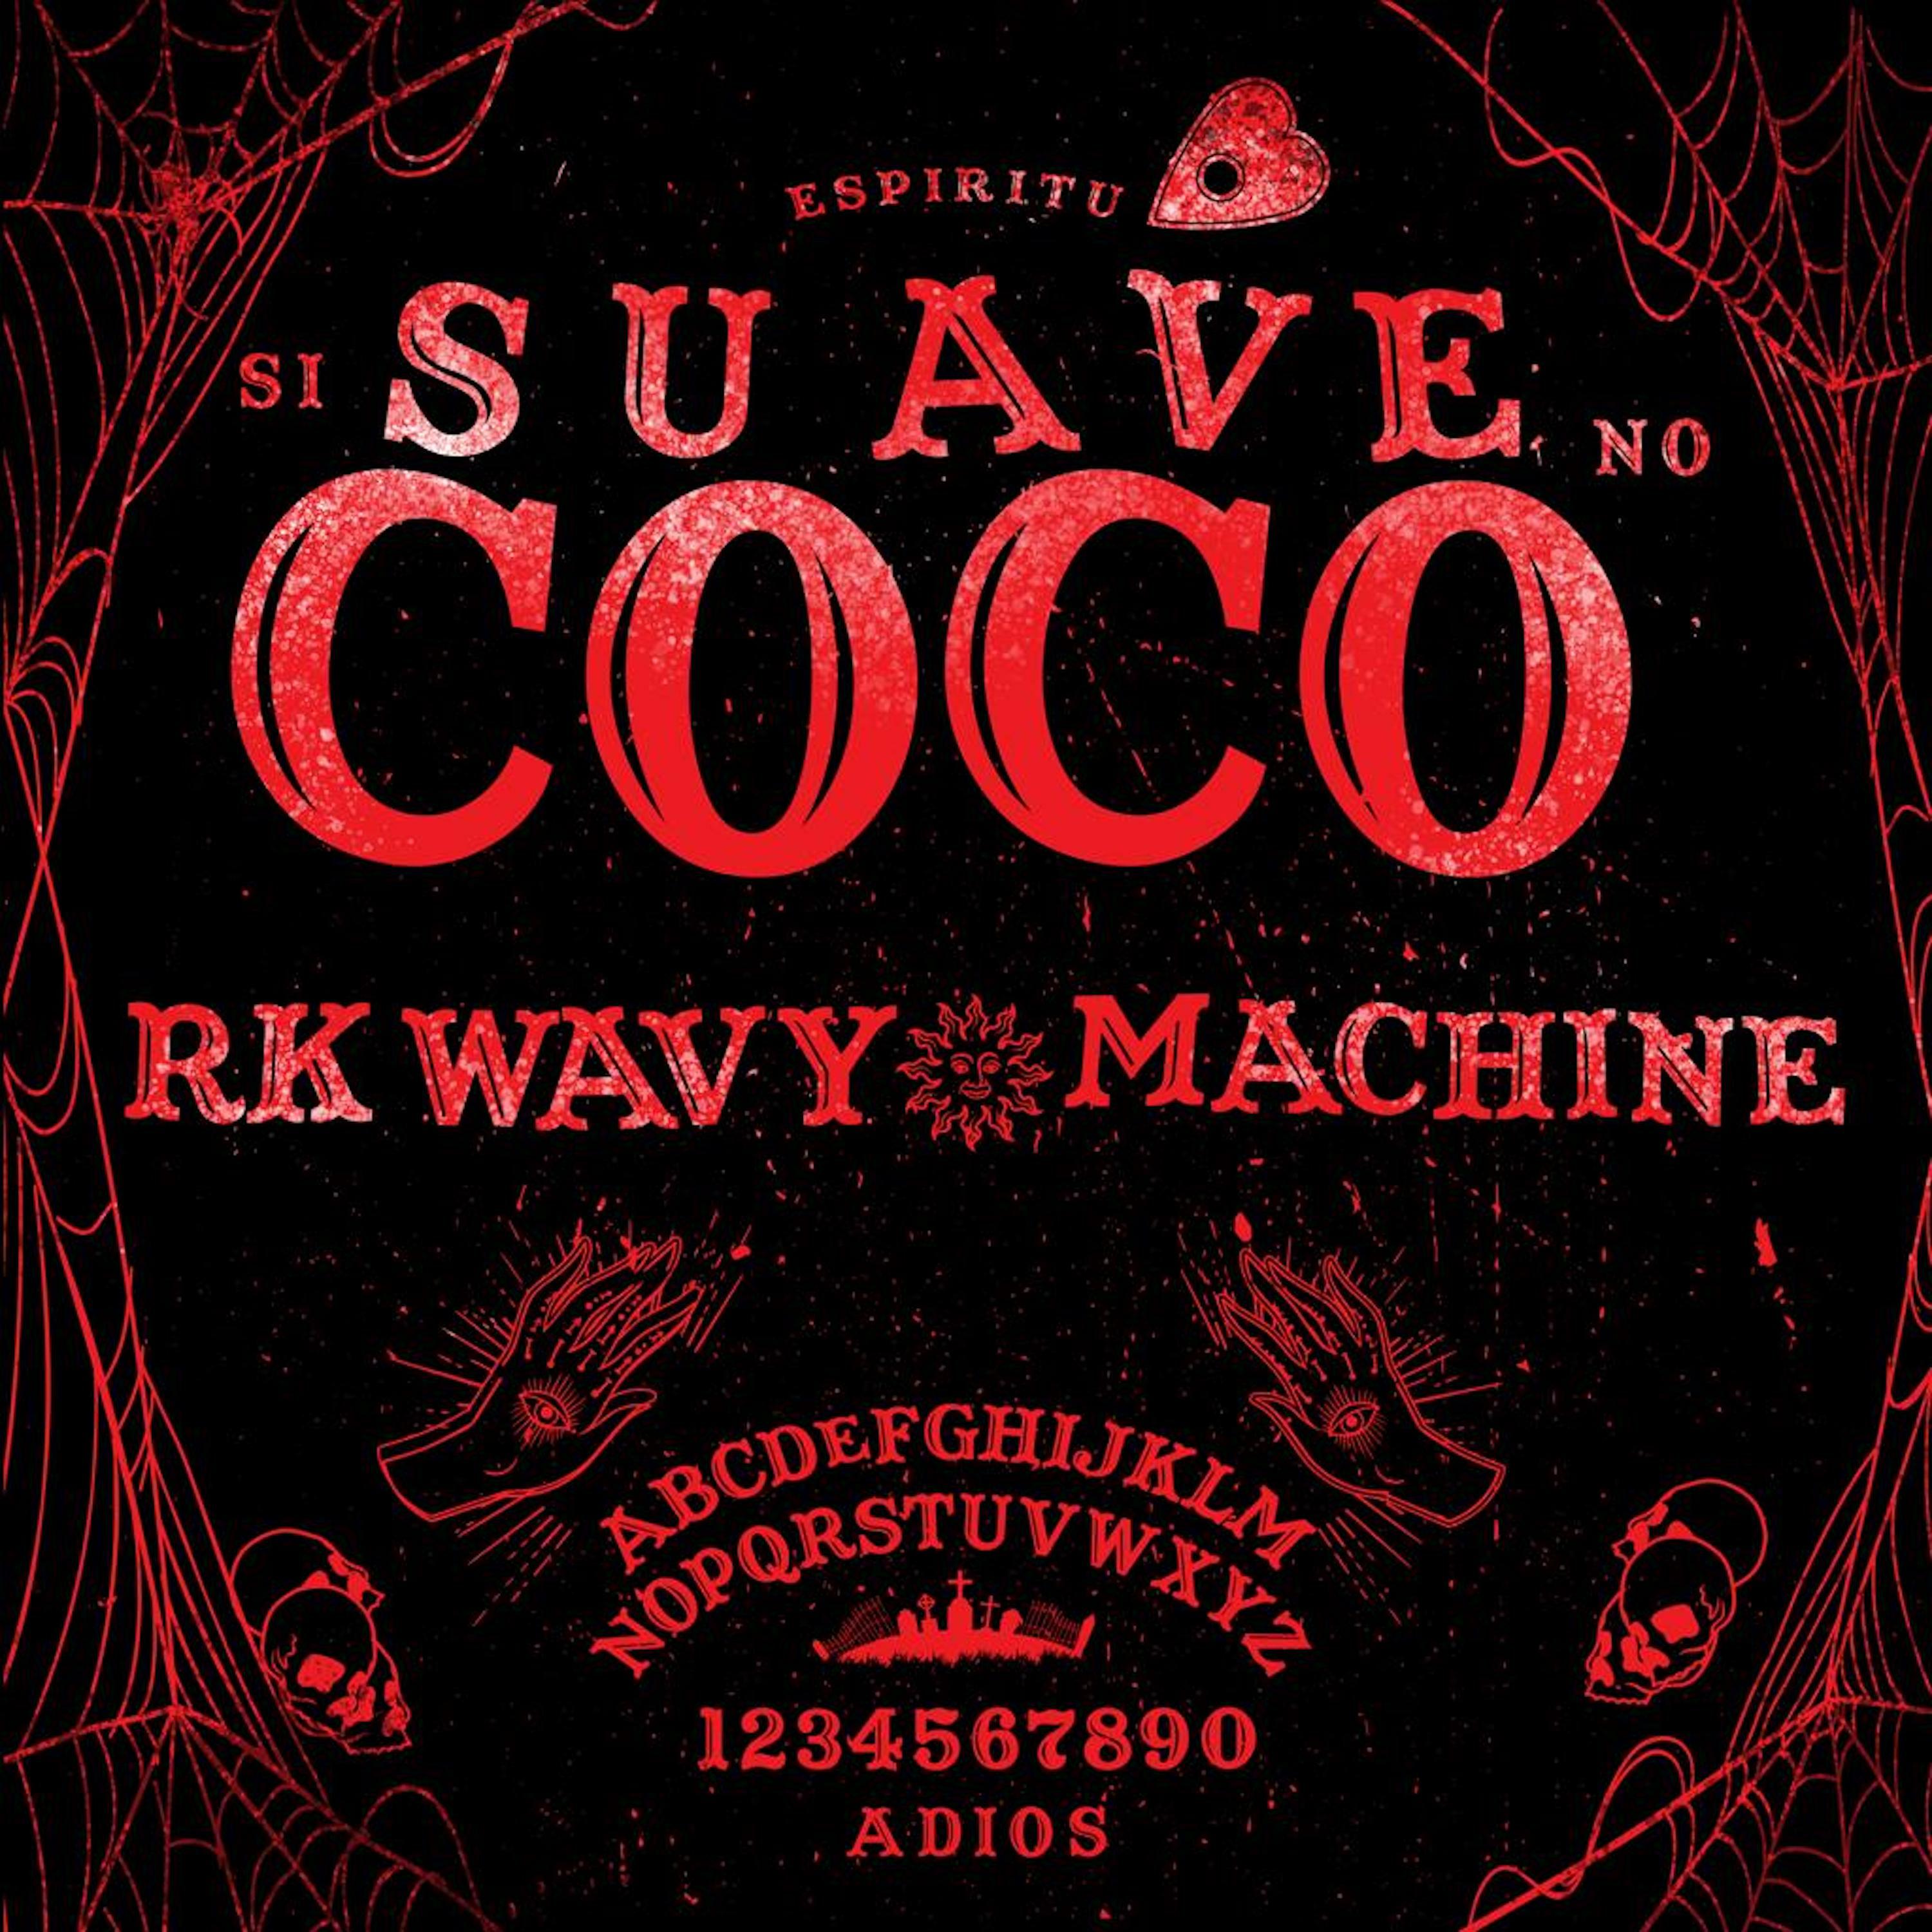 Rk Wavy - SuaveCOCO